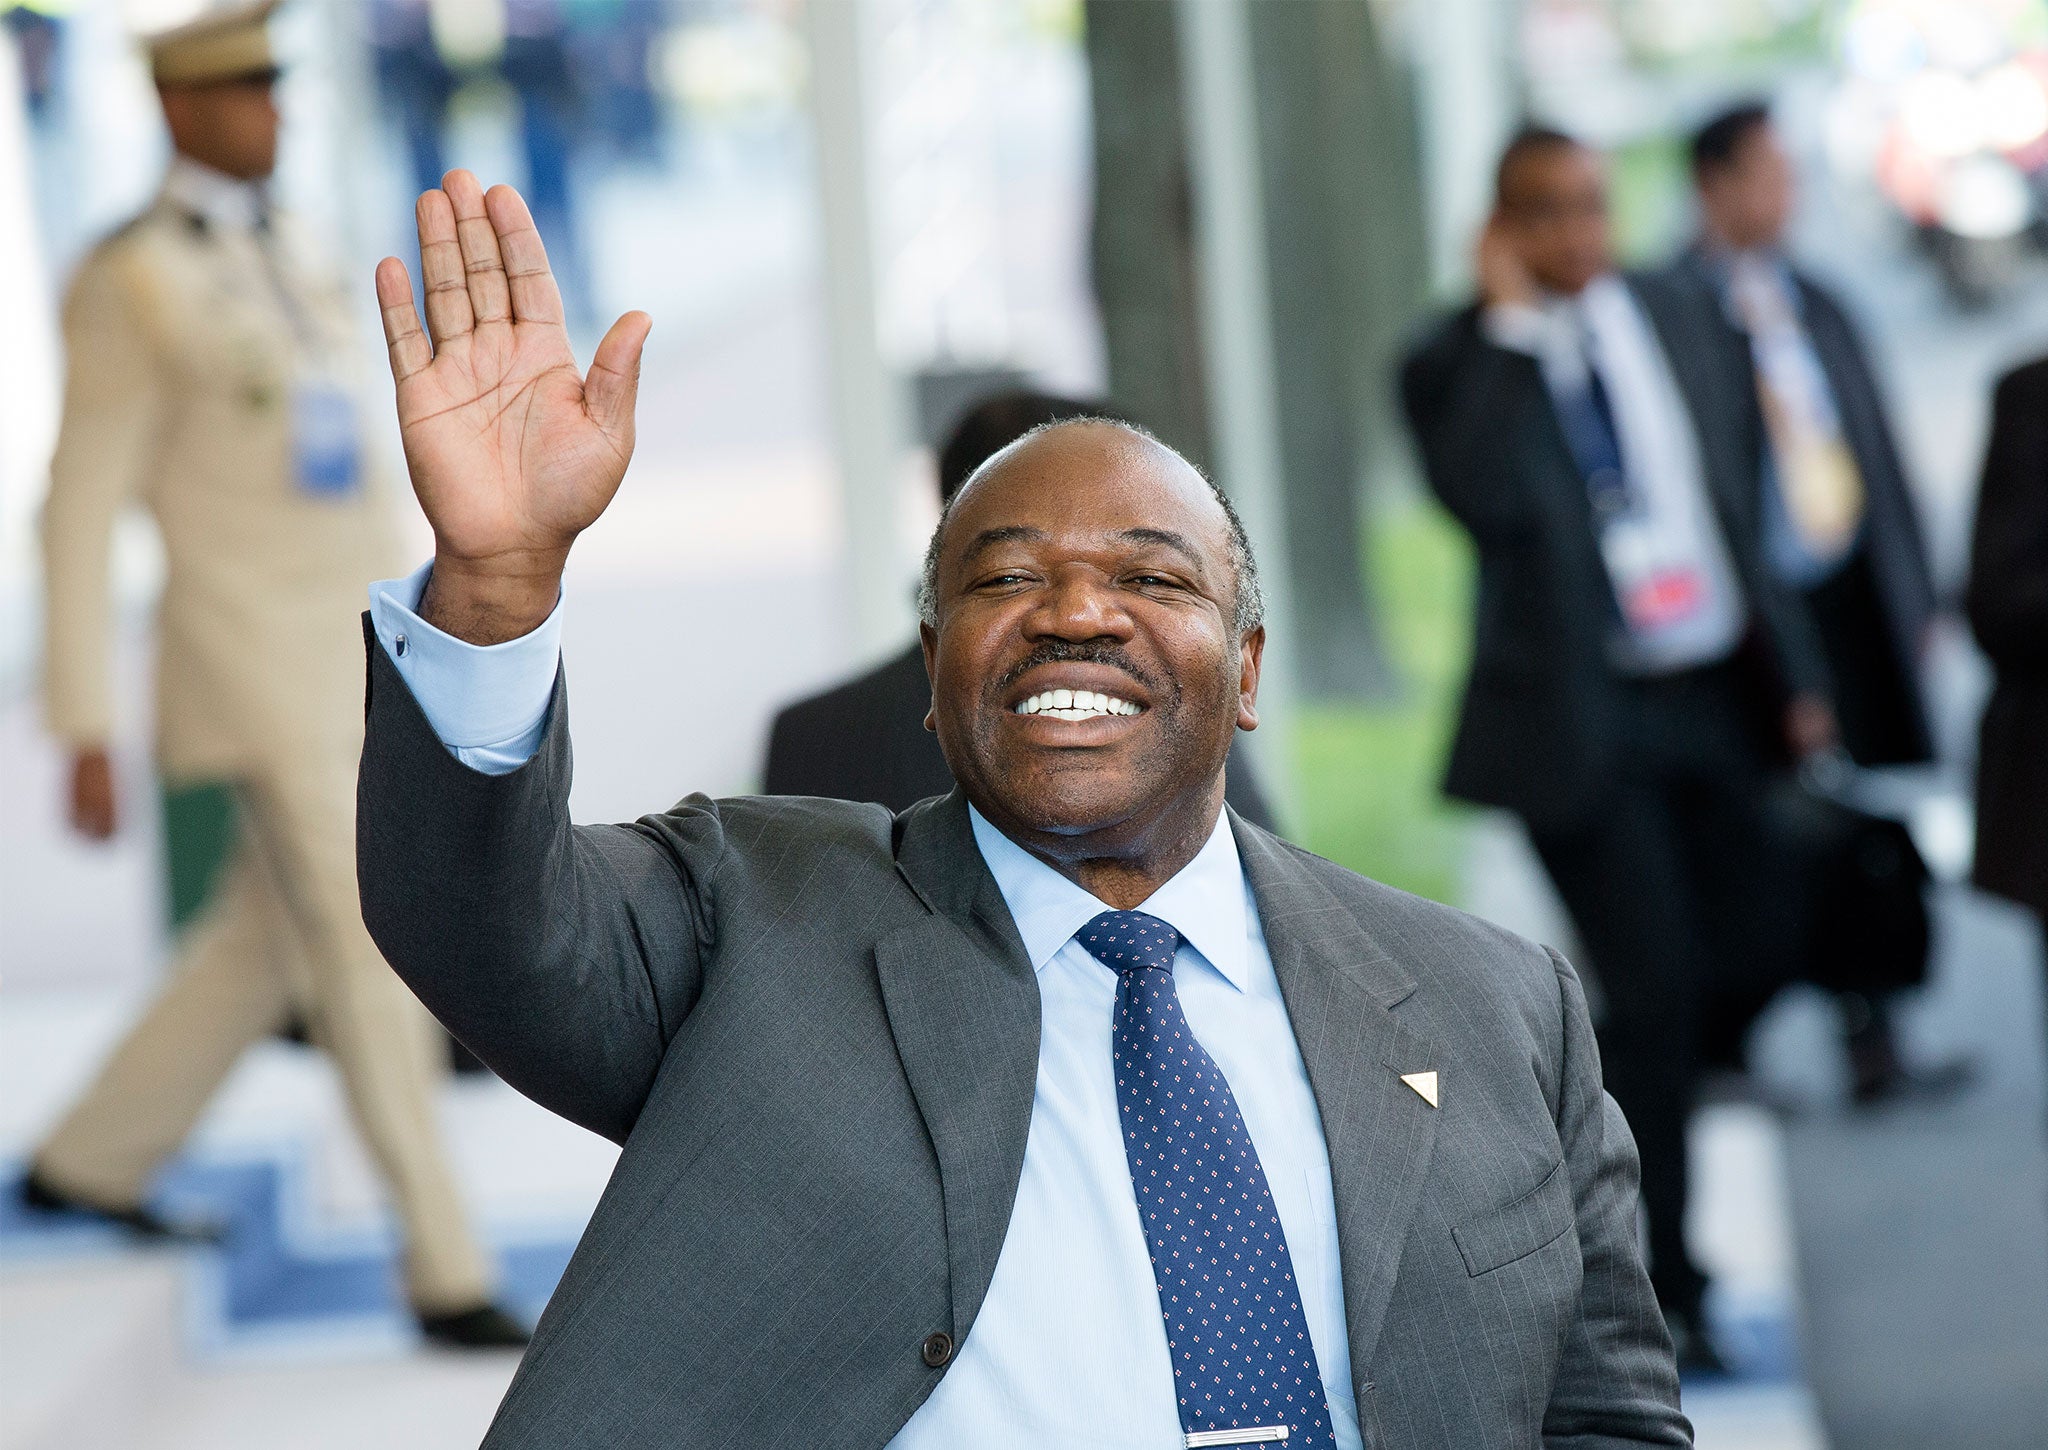 President of Gabon Ali Bongo Ondimba, who has signalled his desire to protect his country's elephants